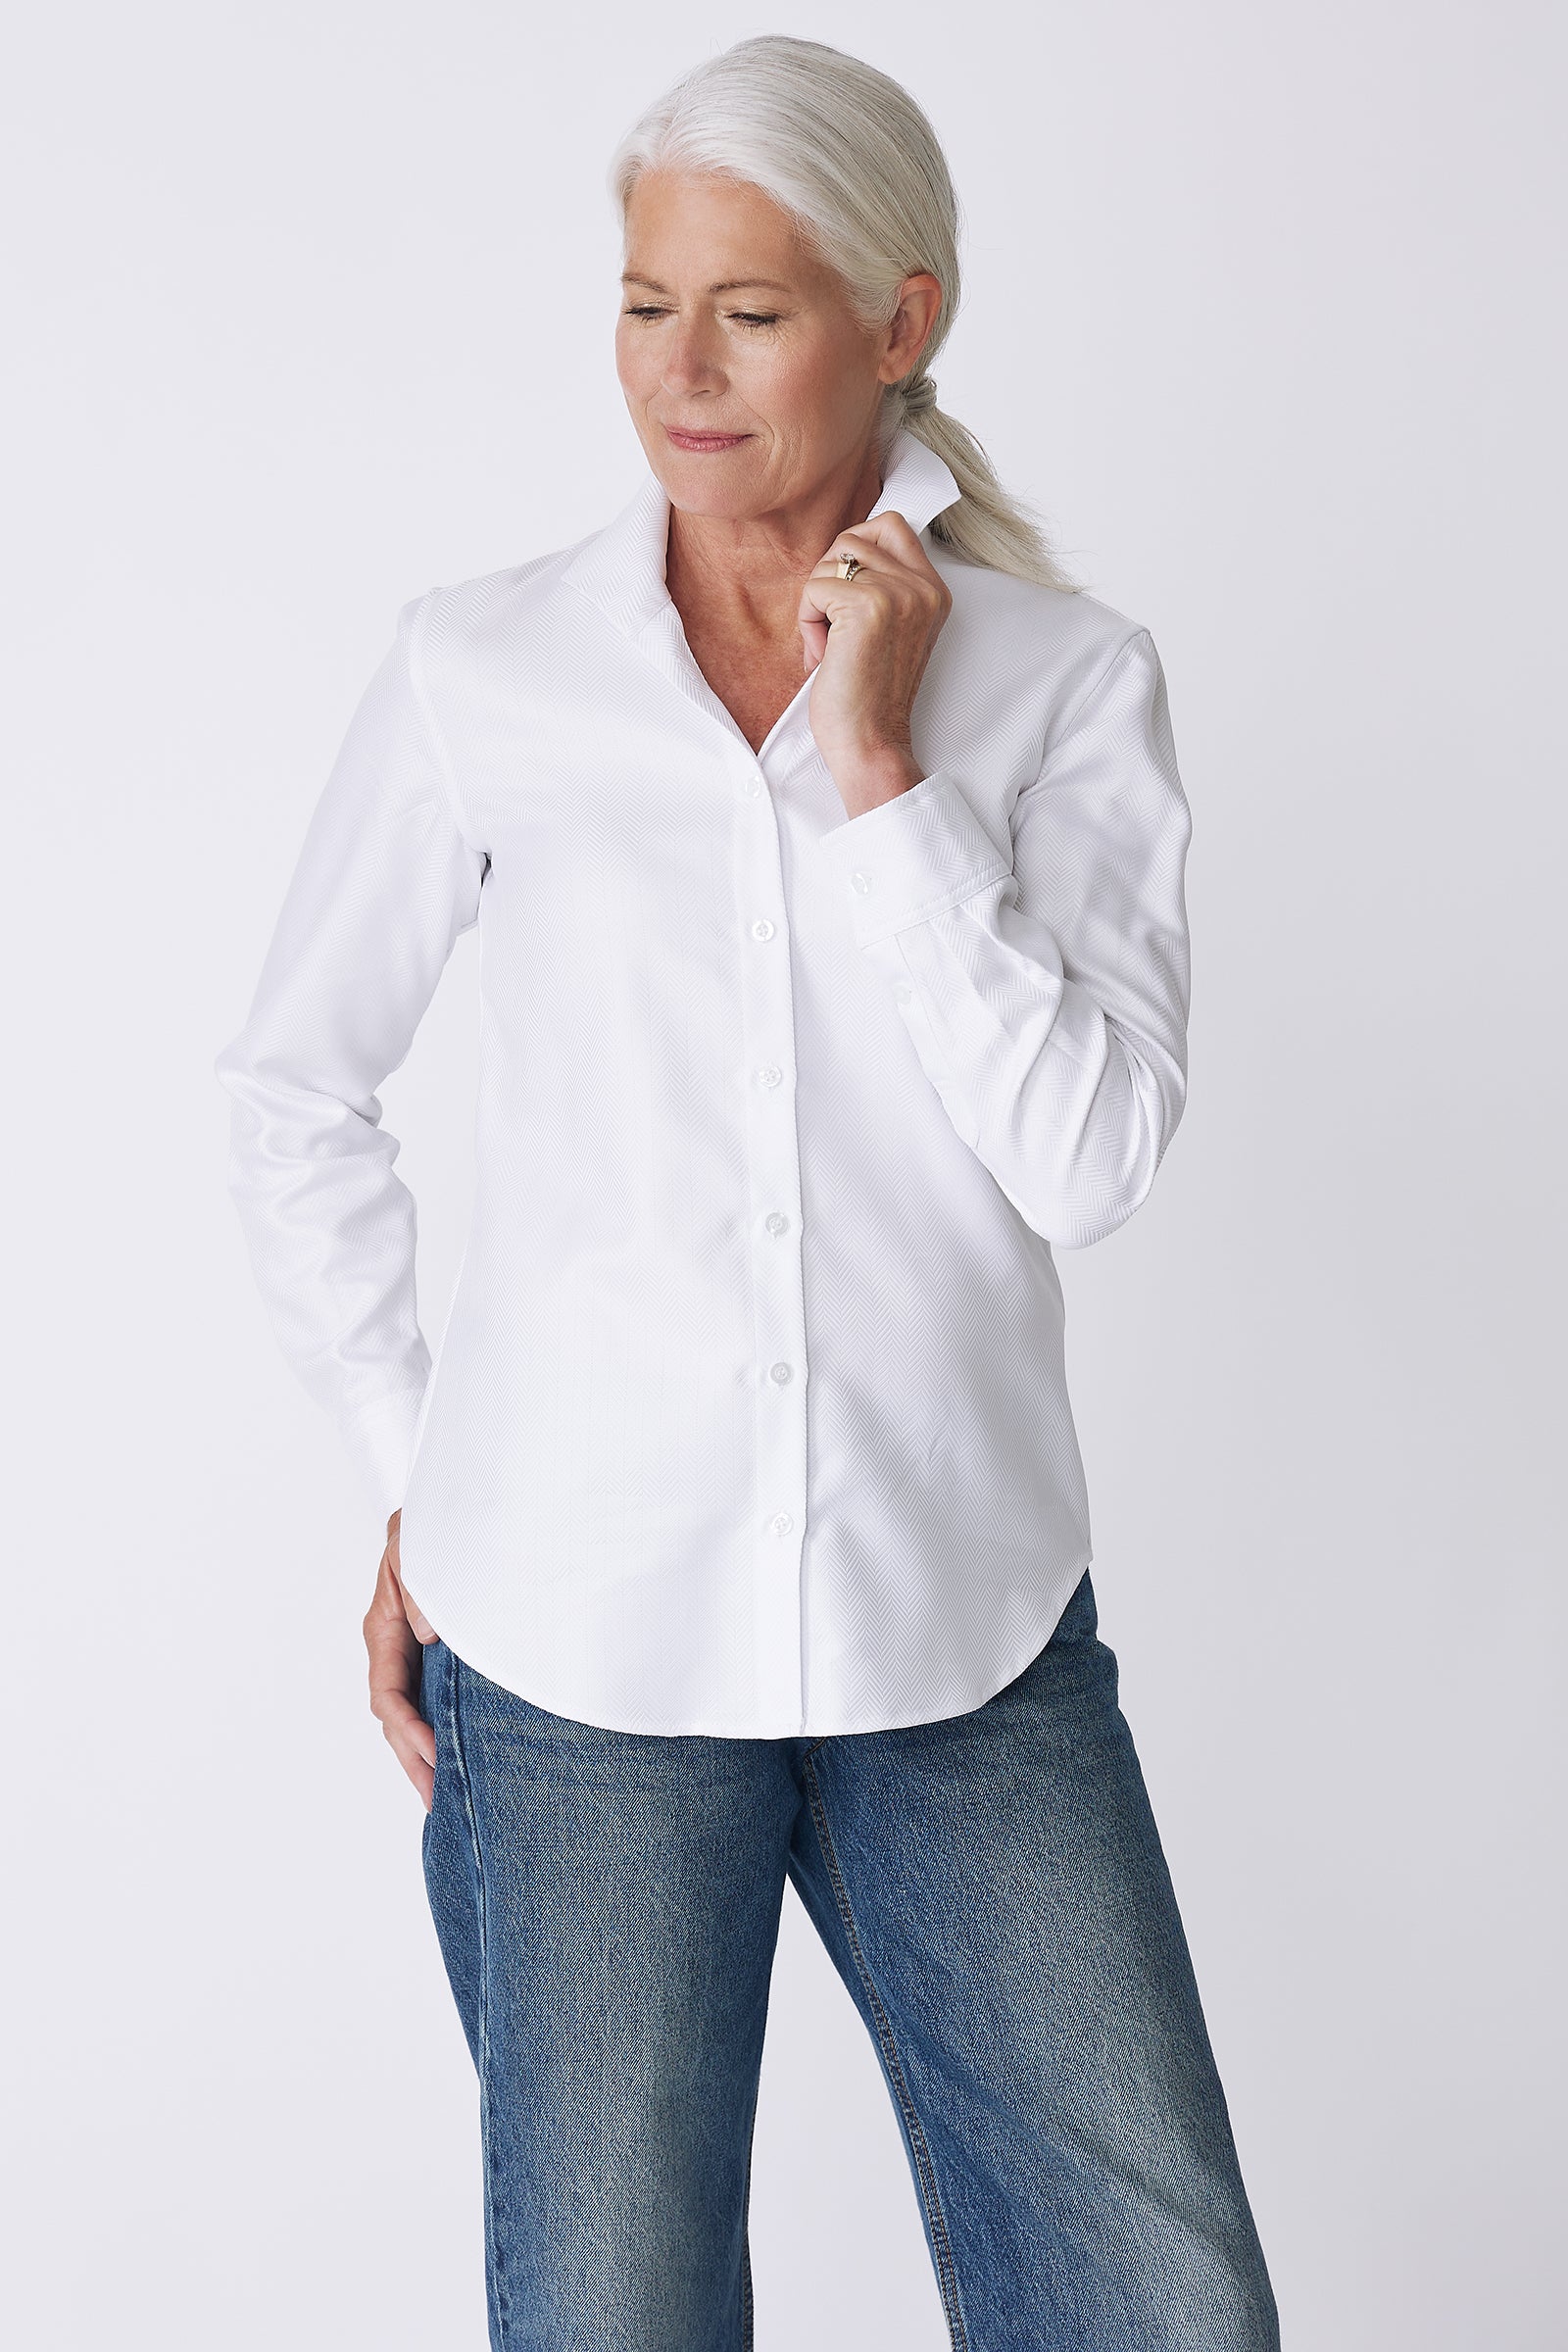 Kal Rieman Ginna Box Pleat Shirt in White Herringbone on Model front view holding collar